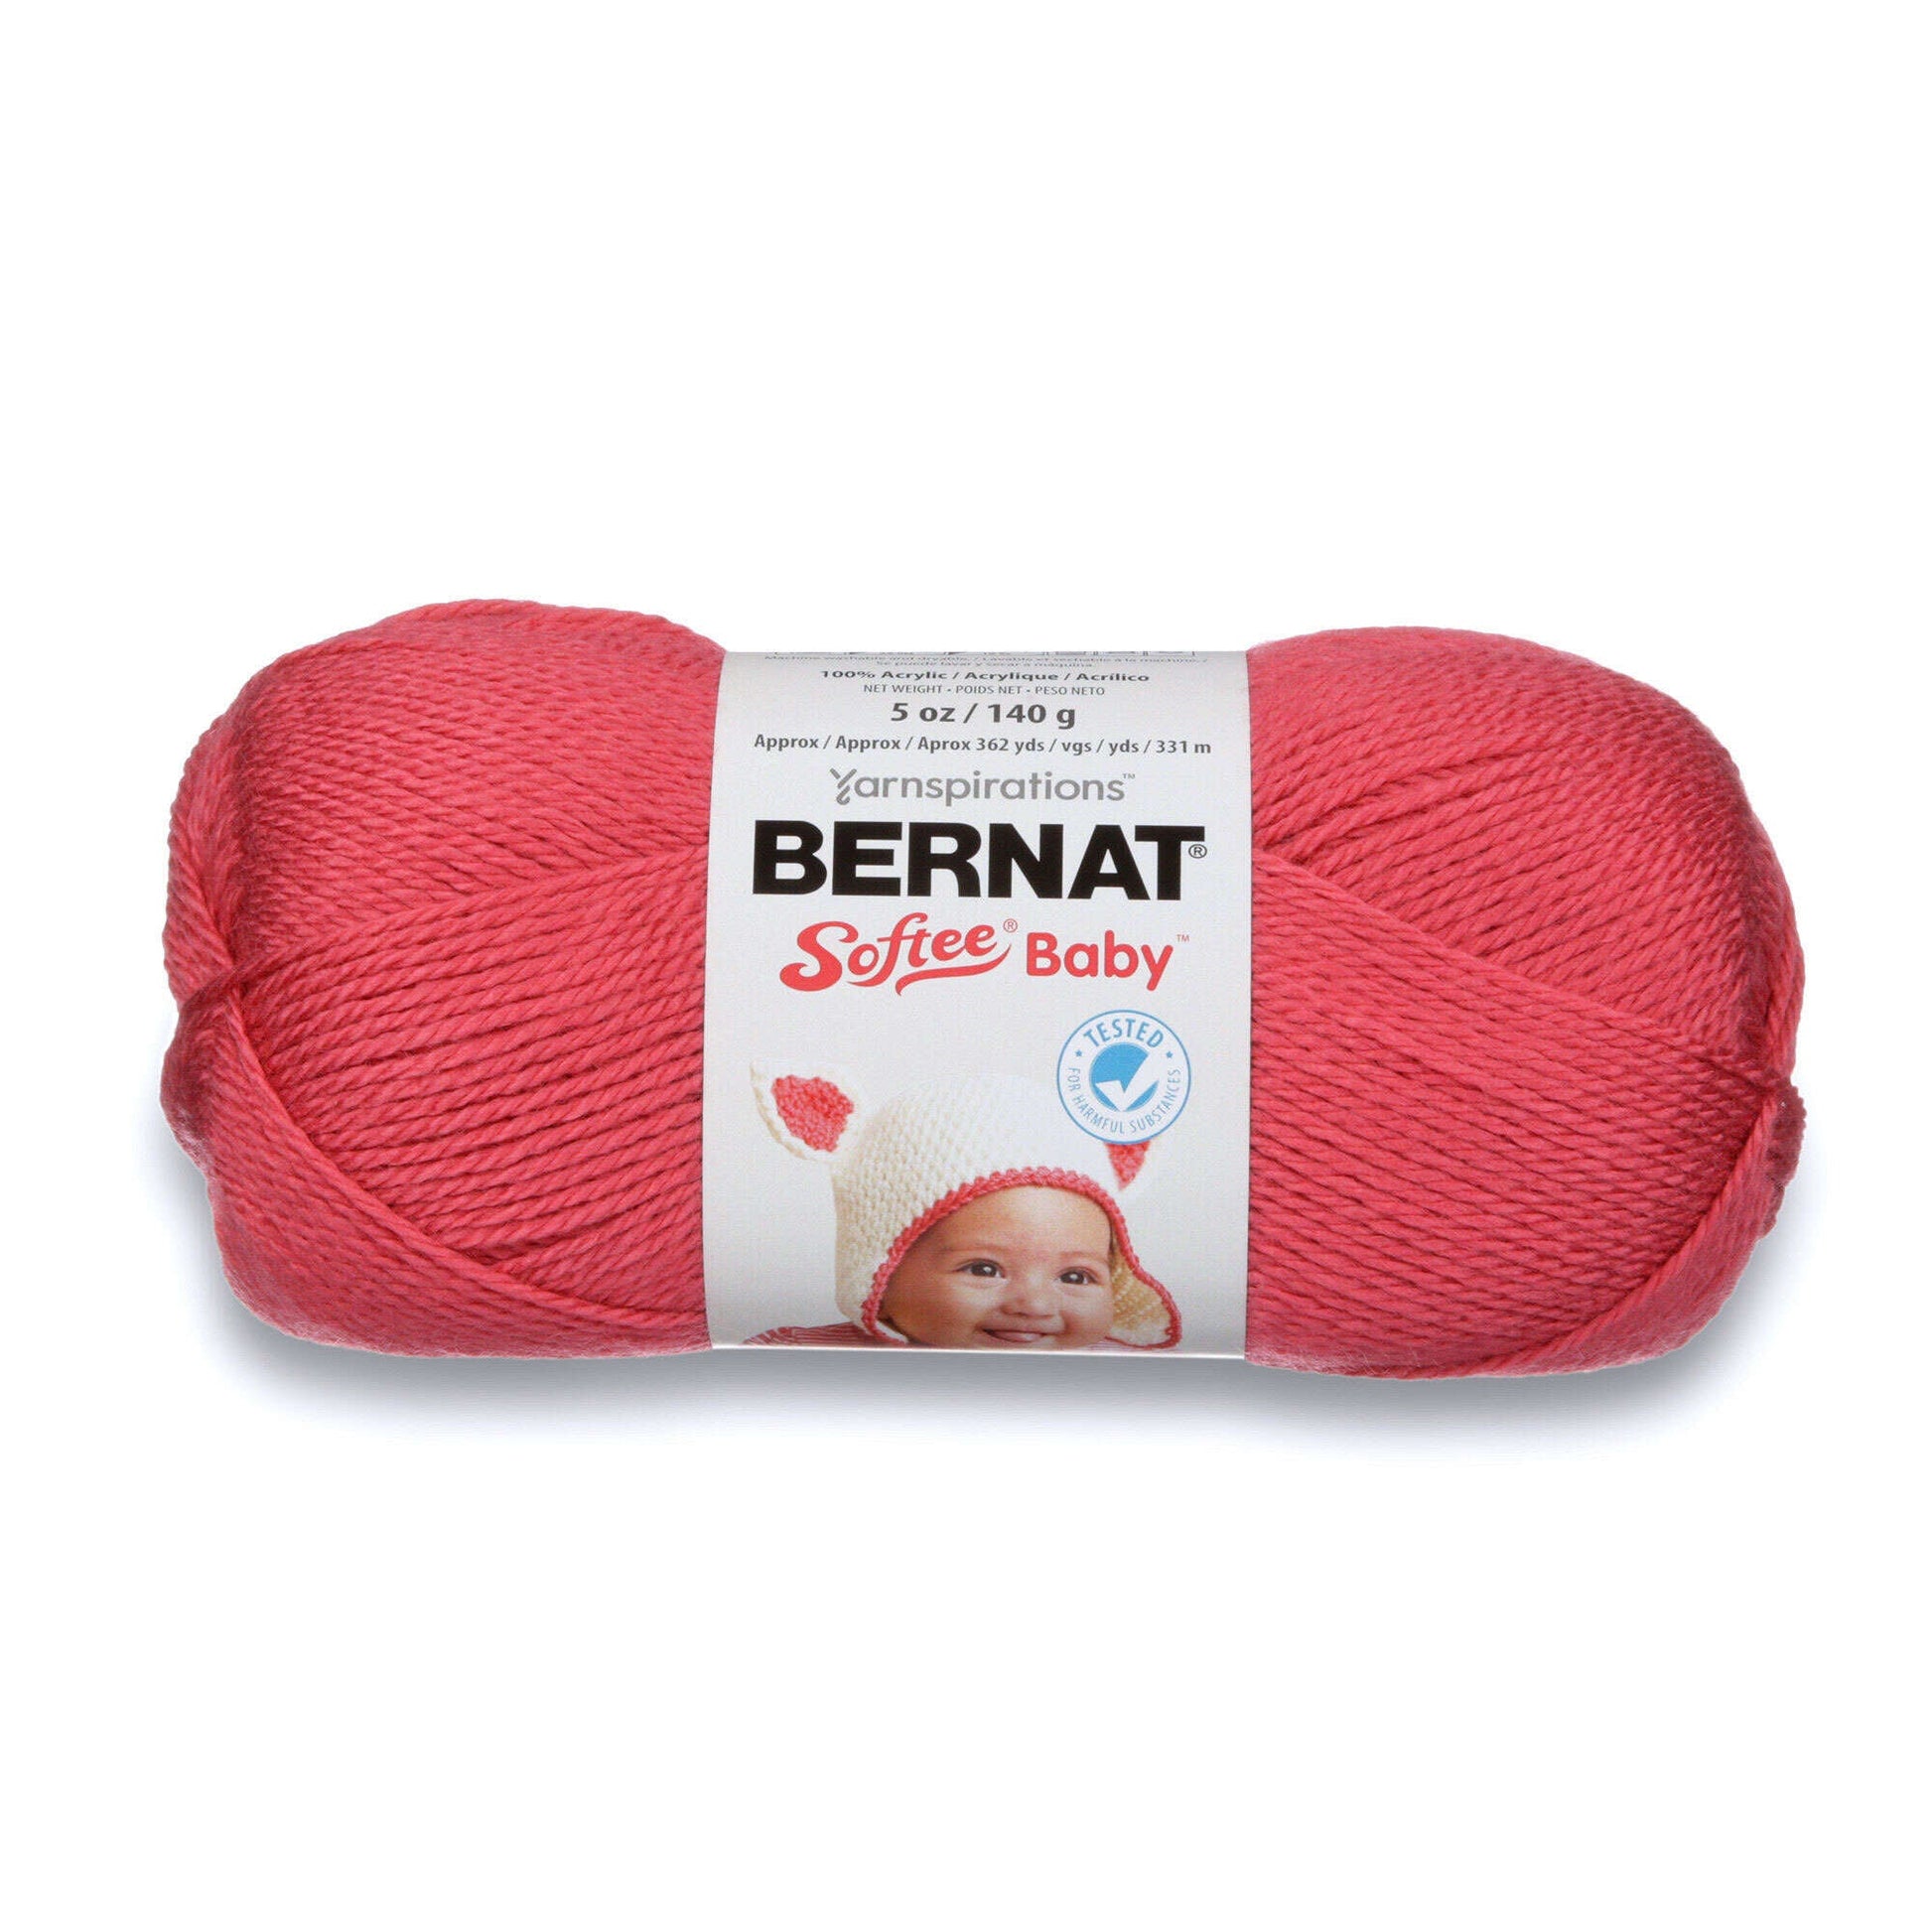 Bernat Softee Baby Yarn - Clearance Shades